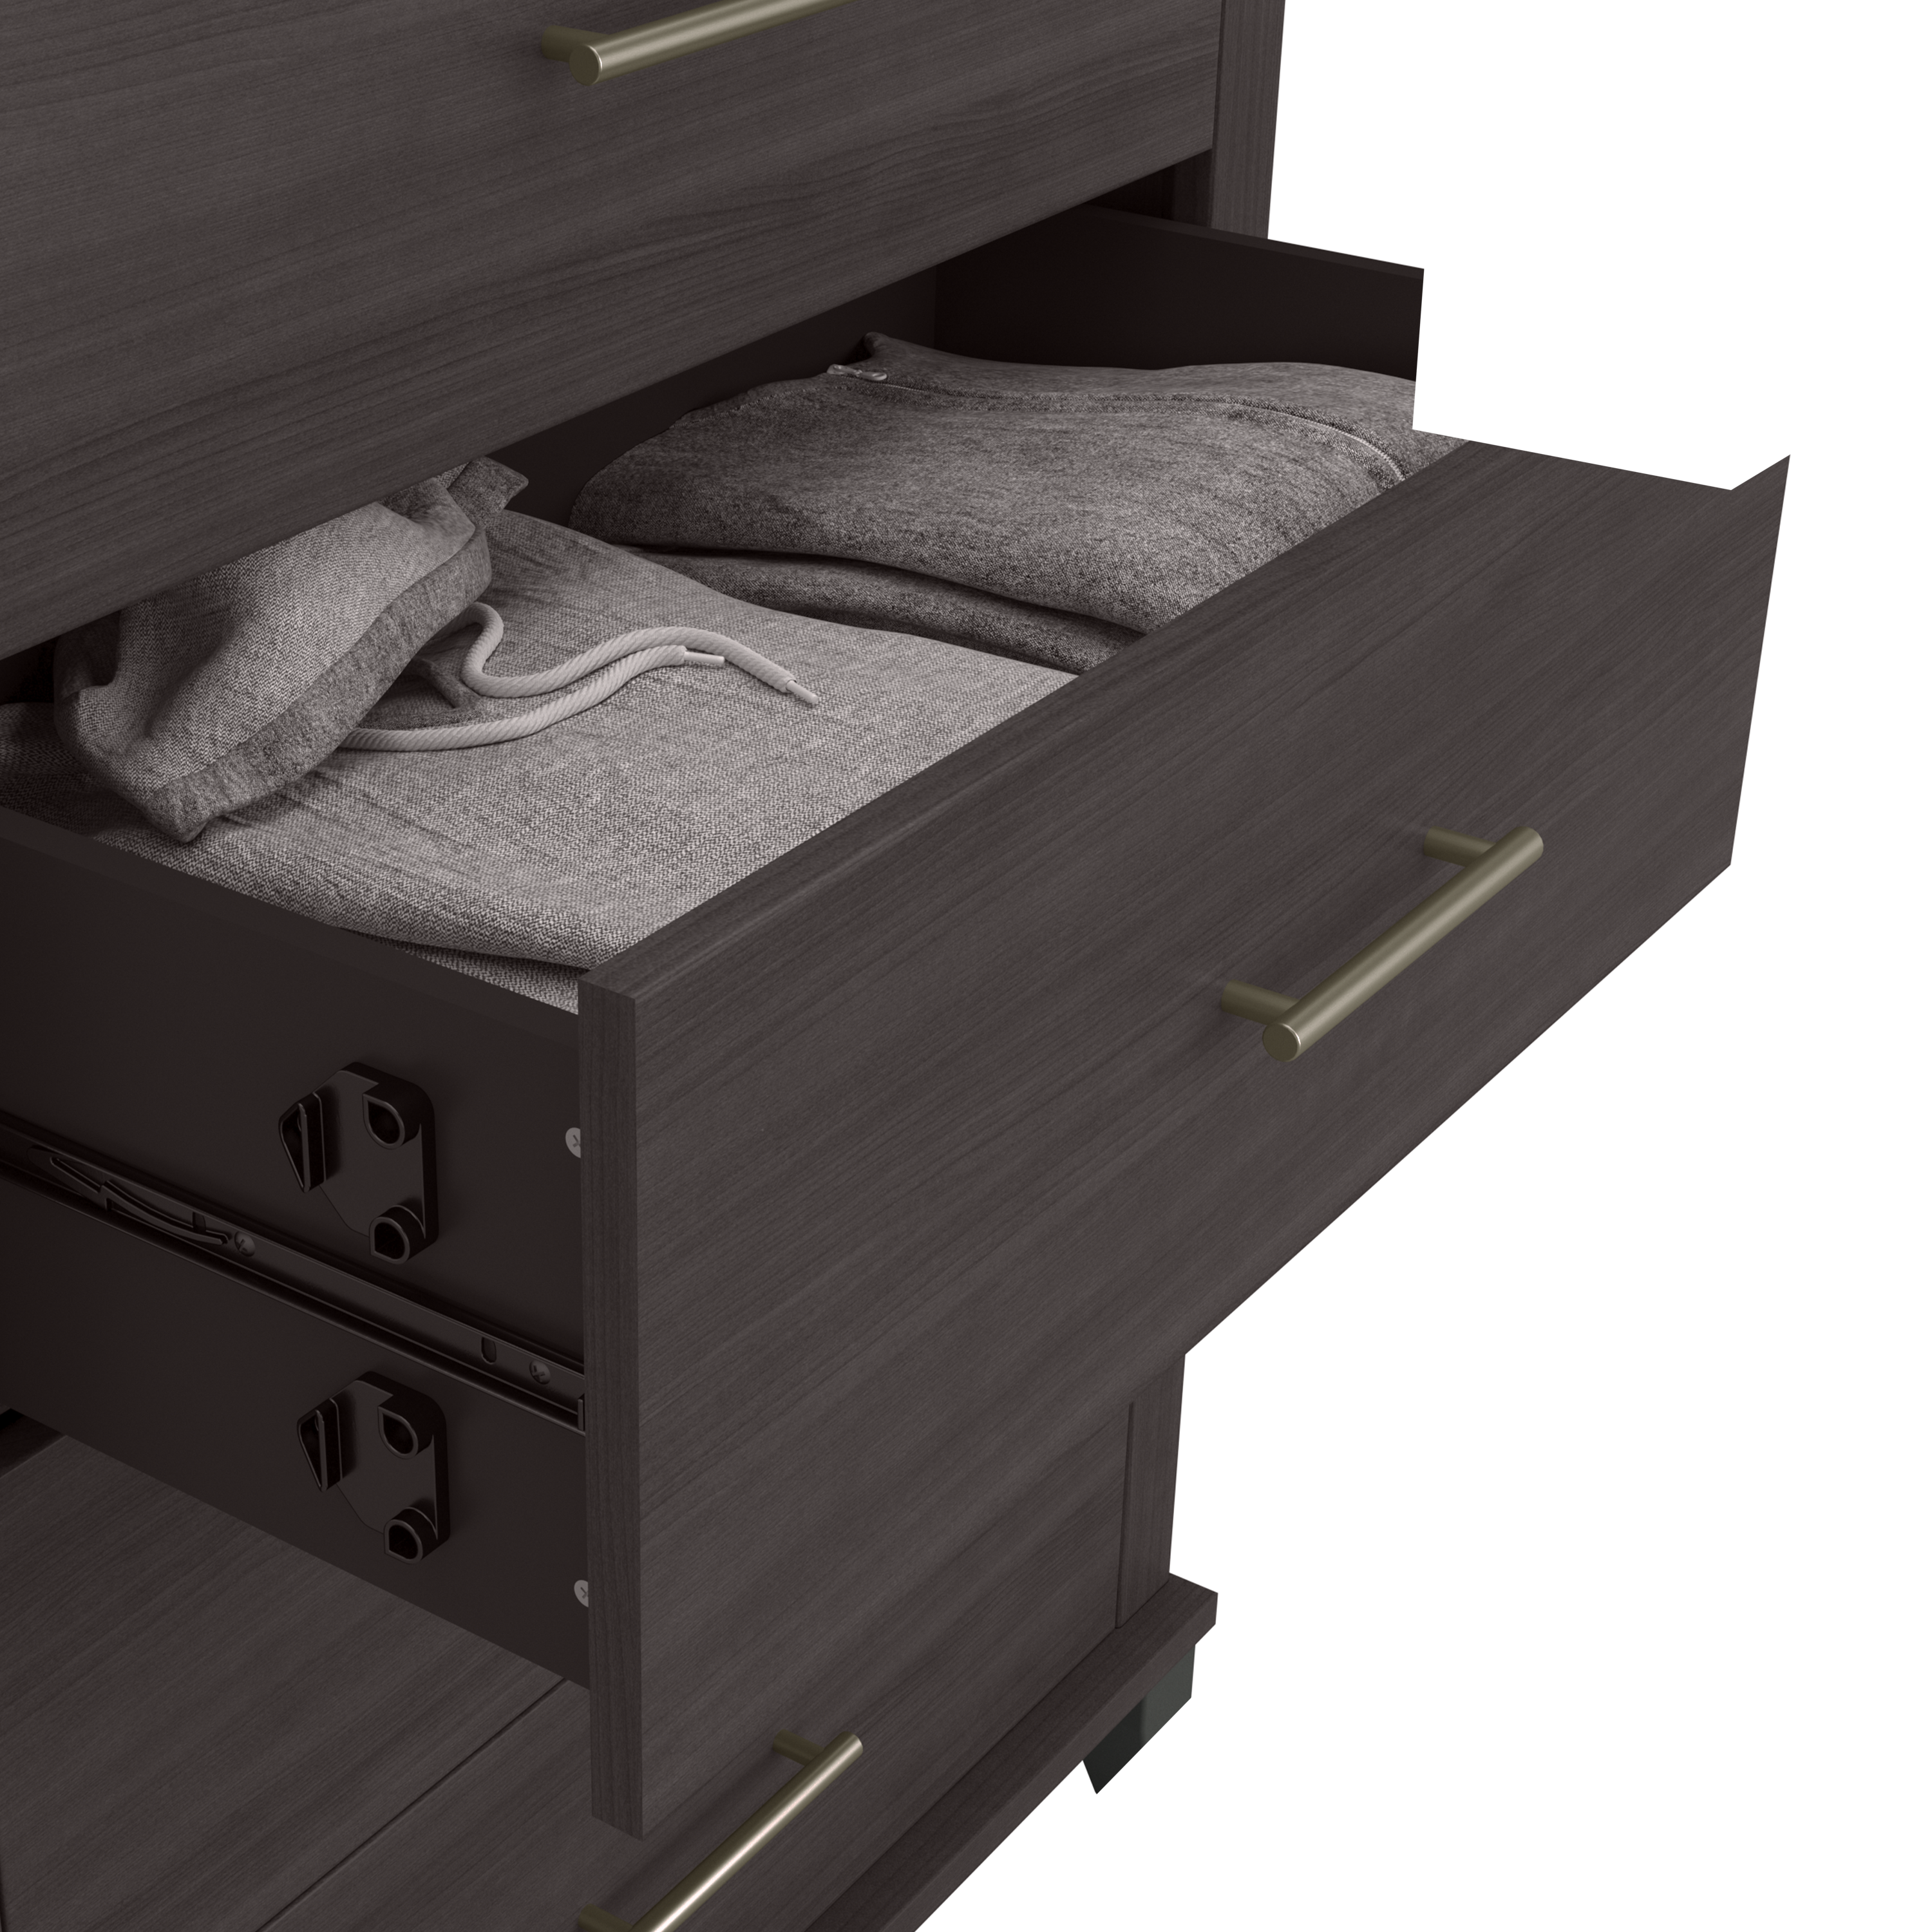 Shop Bush Furniture Somerset Full/Queen Size Headboard, Dresser and Nightstand Bedroom Set 04 SET003SG #color_storm gray